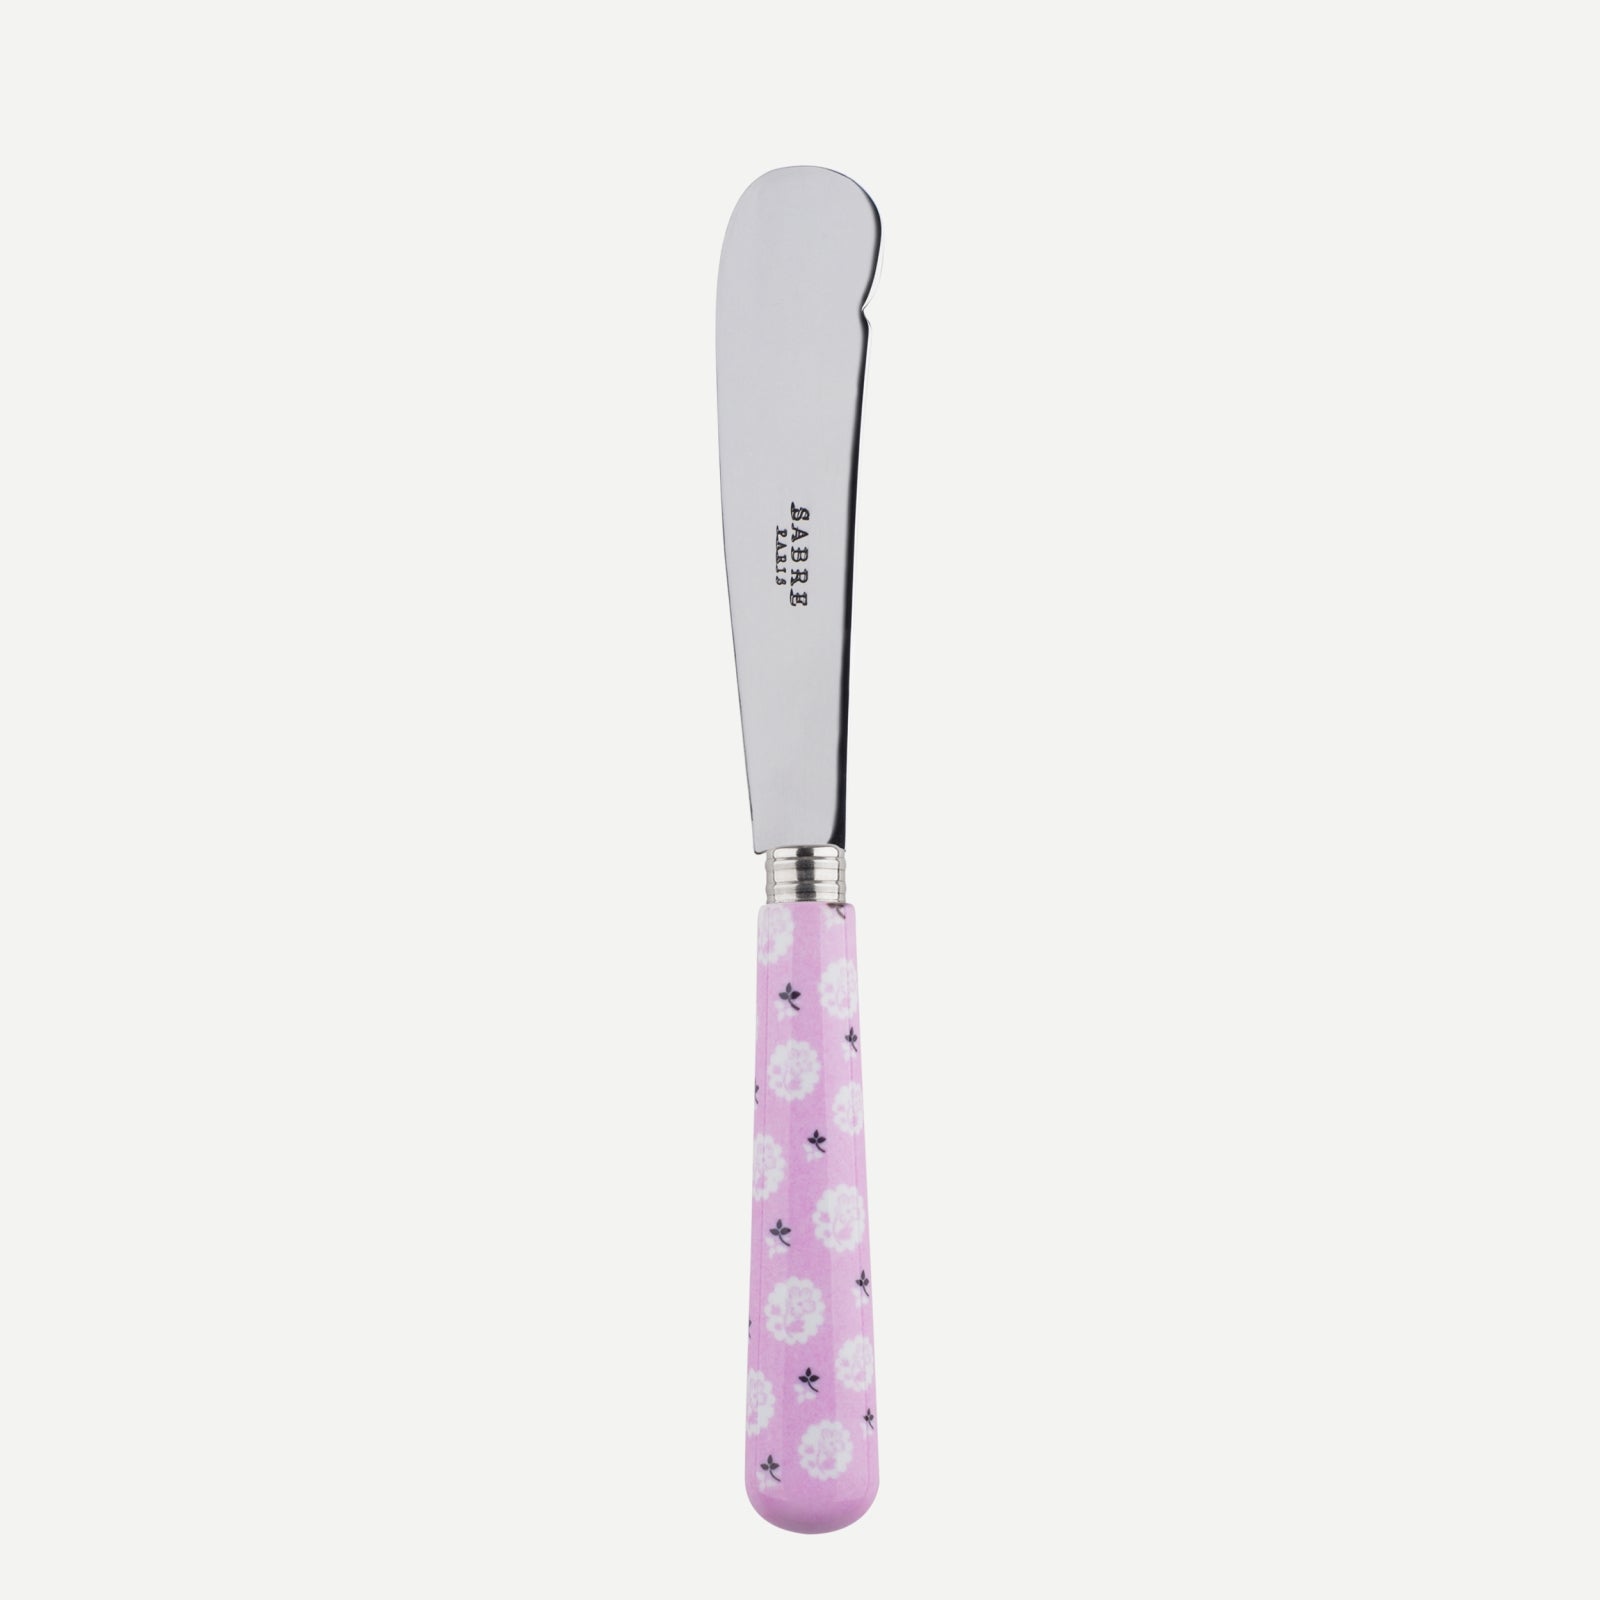 Butter knife - Provencal - Pink